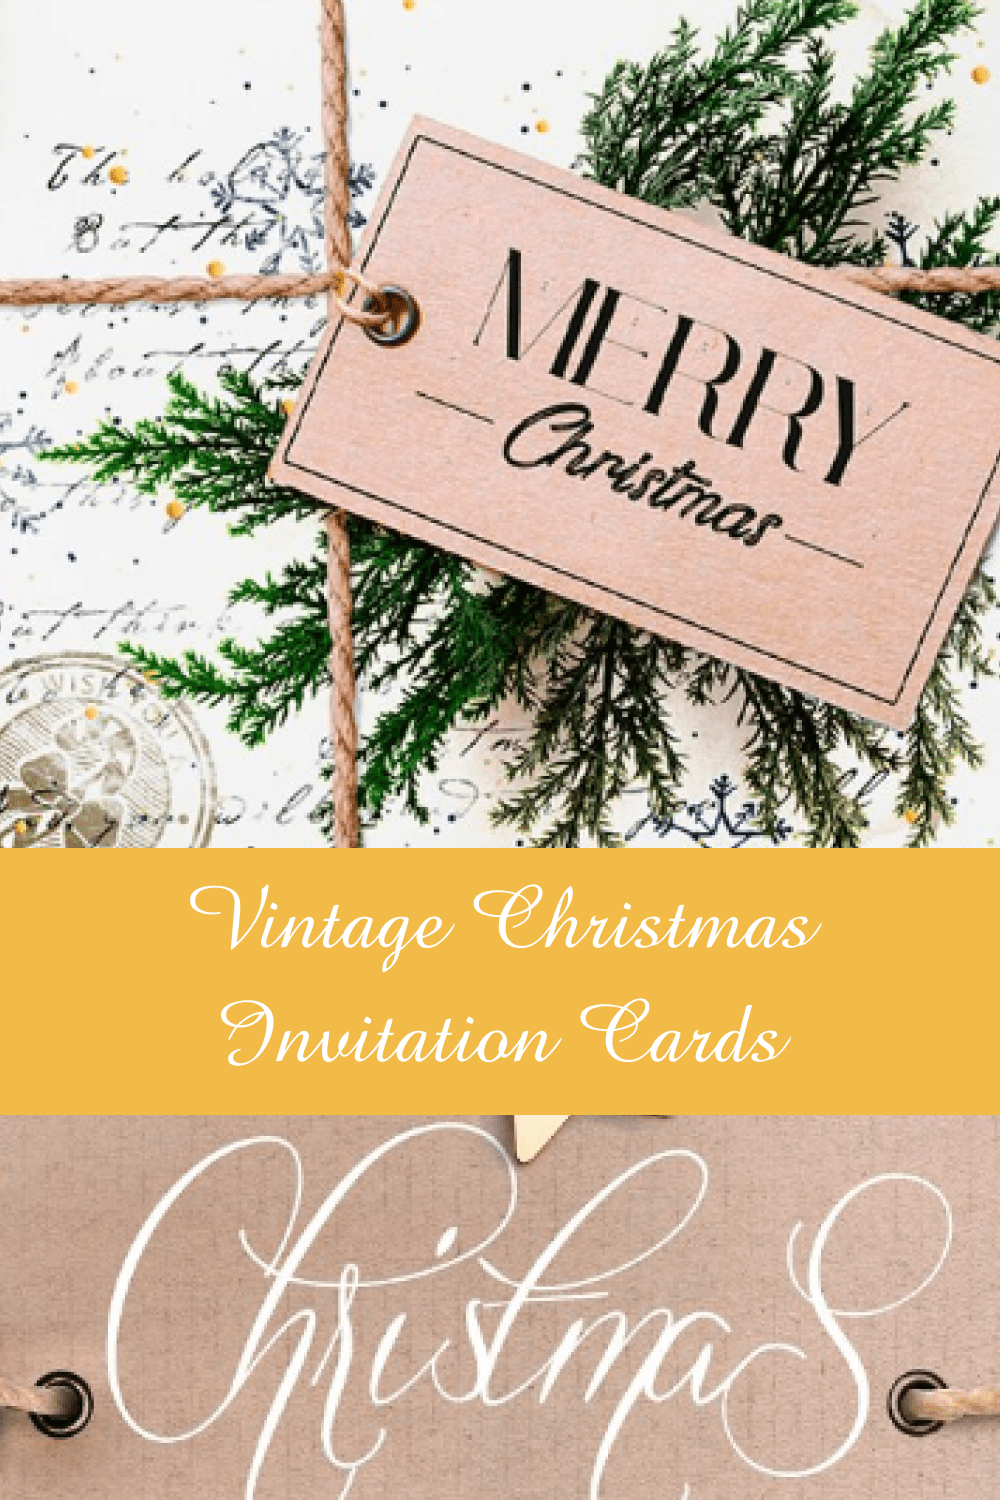 Vintage Christmas Invitation Cards Pinterest image.